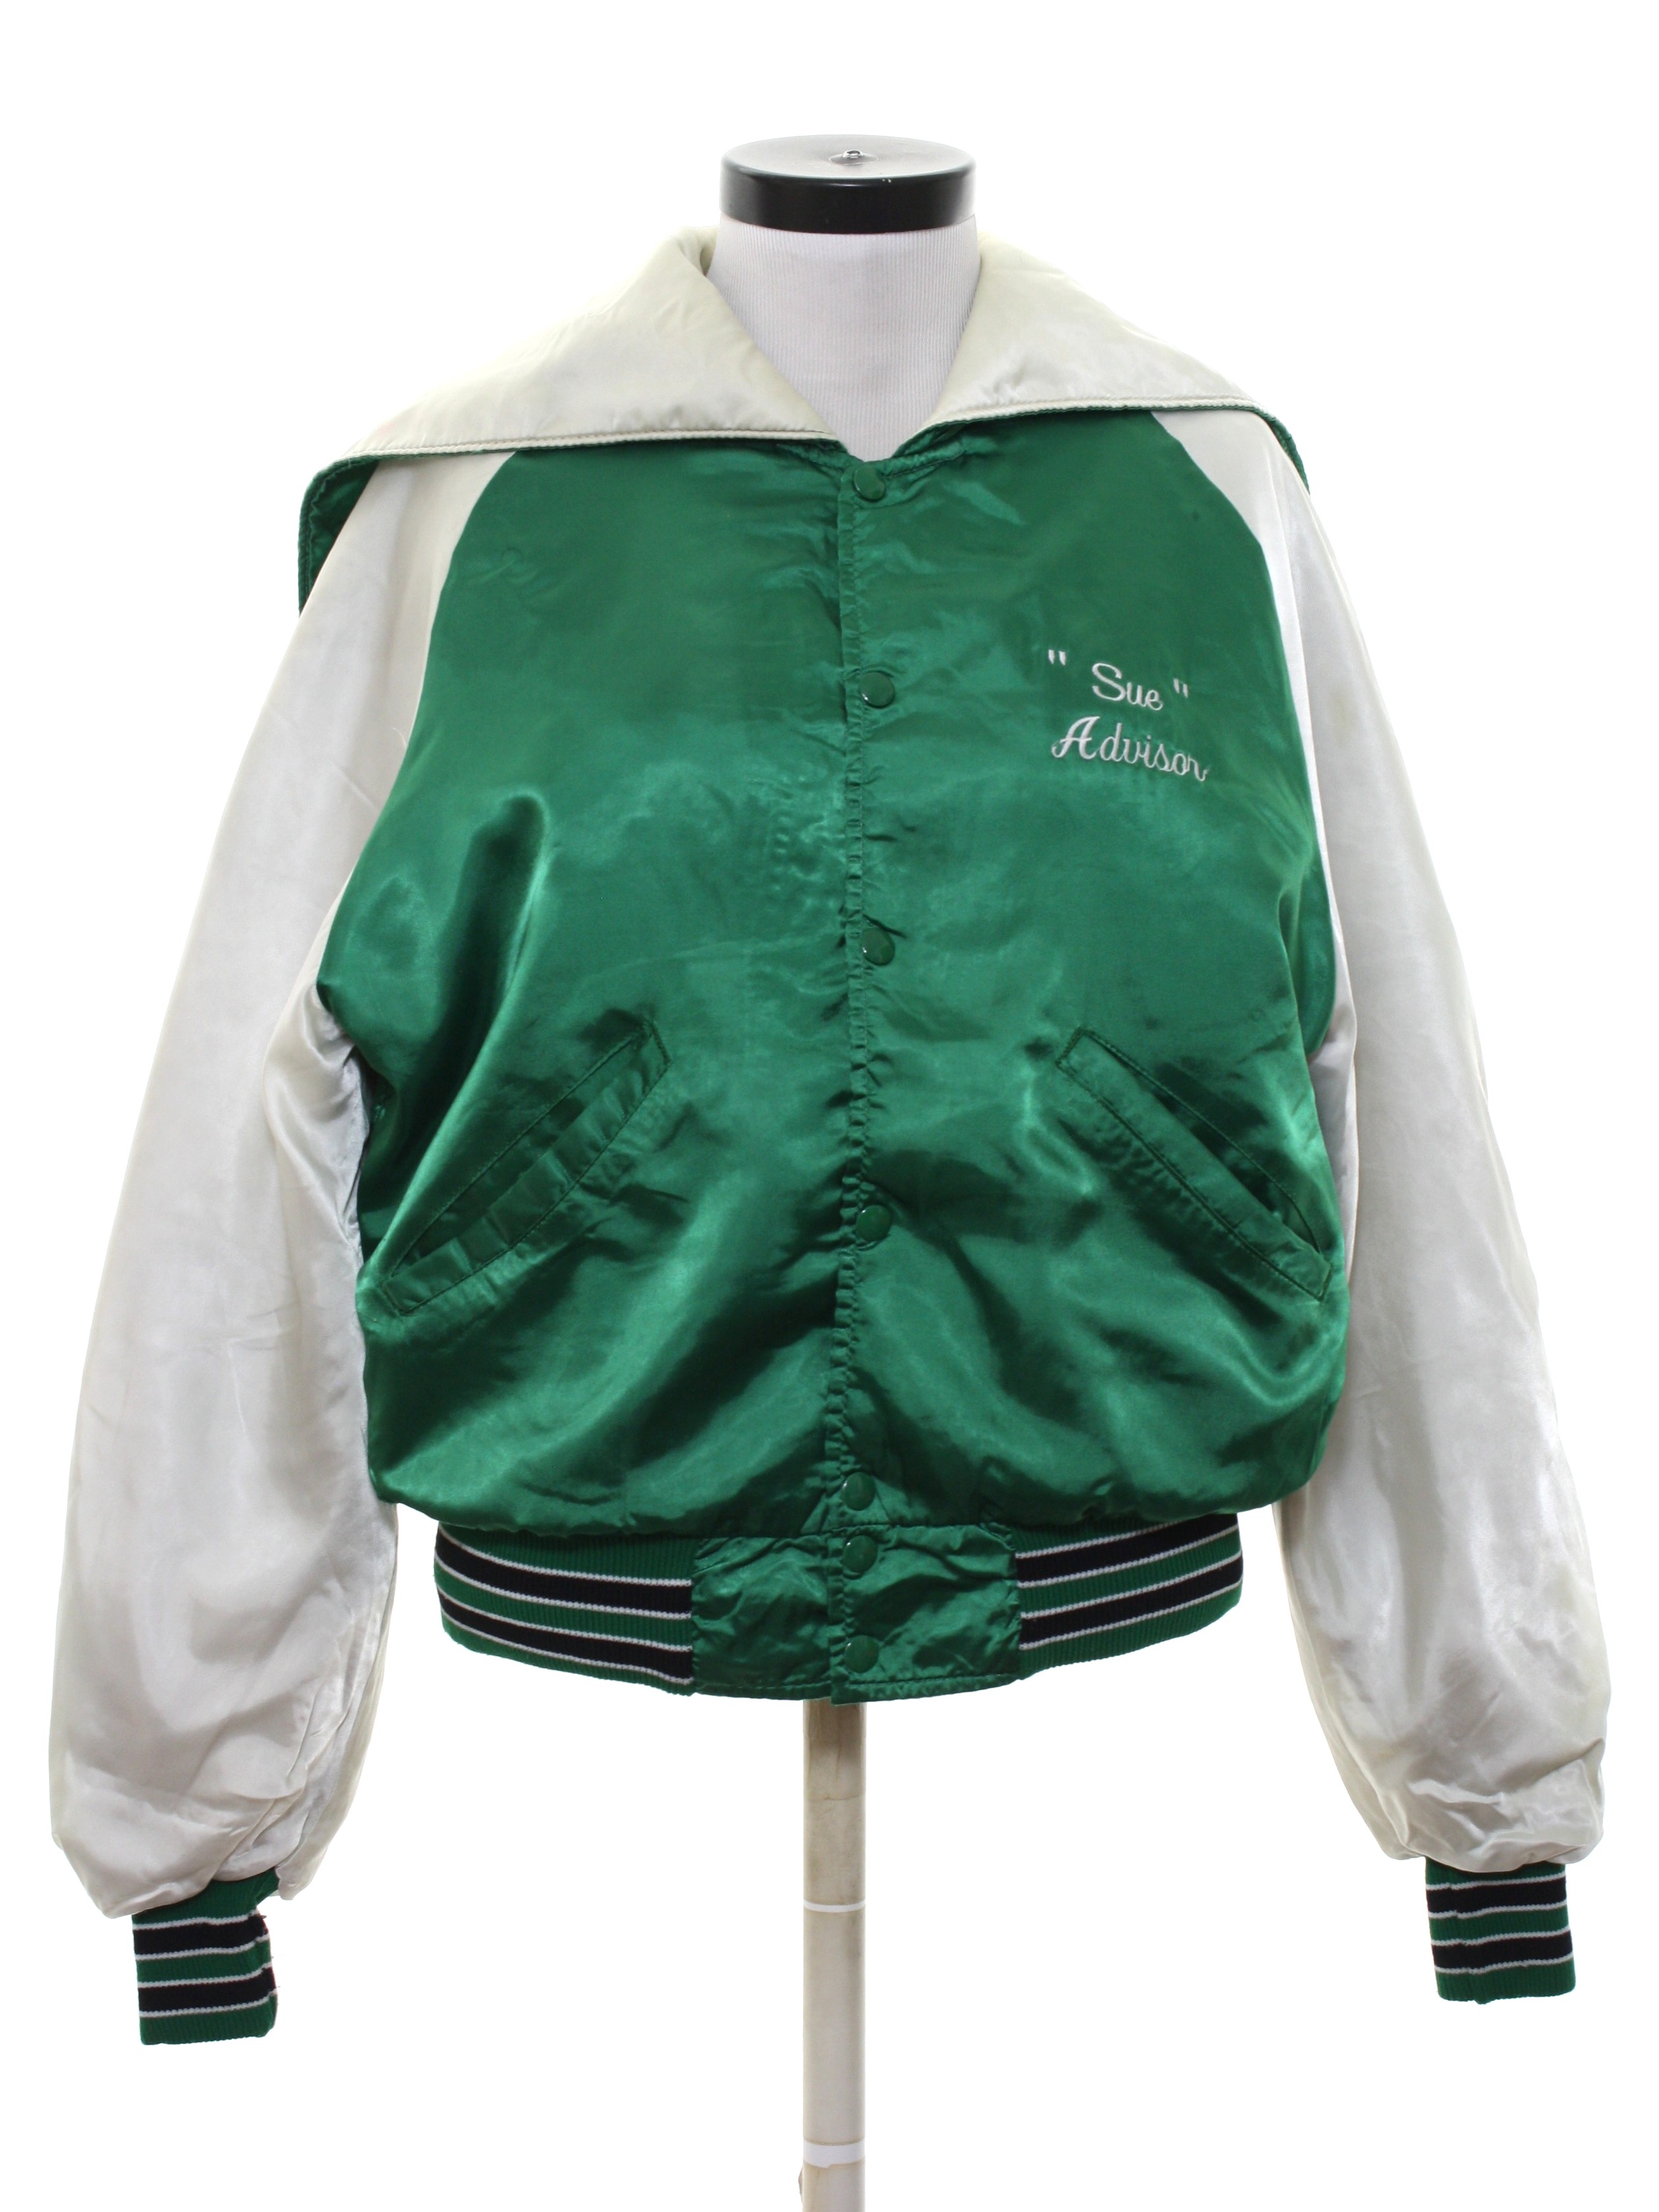 Retro Seventies Jacket: Late 70s or Early 80s -Delong Sportswear ...